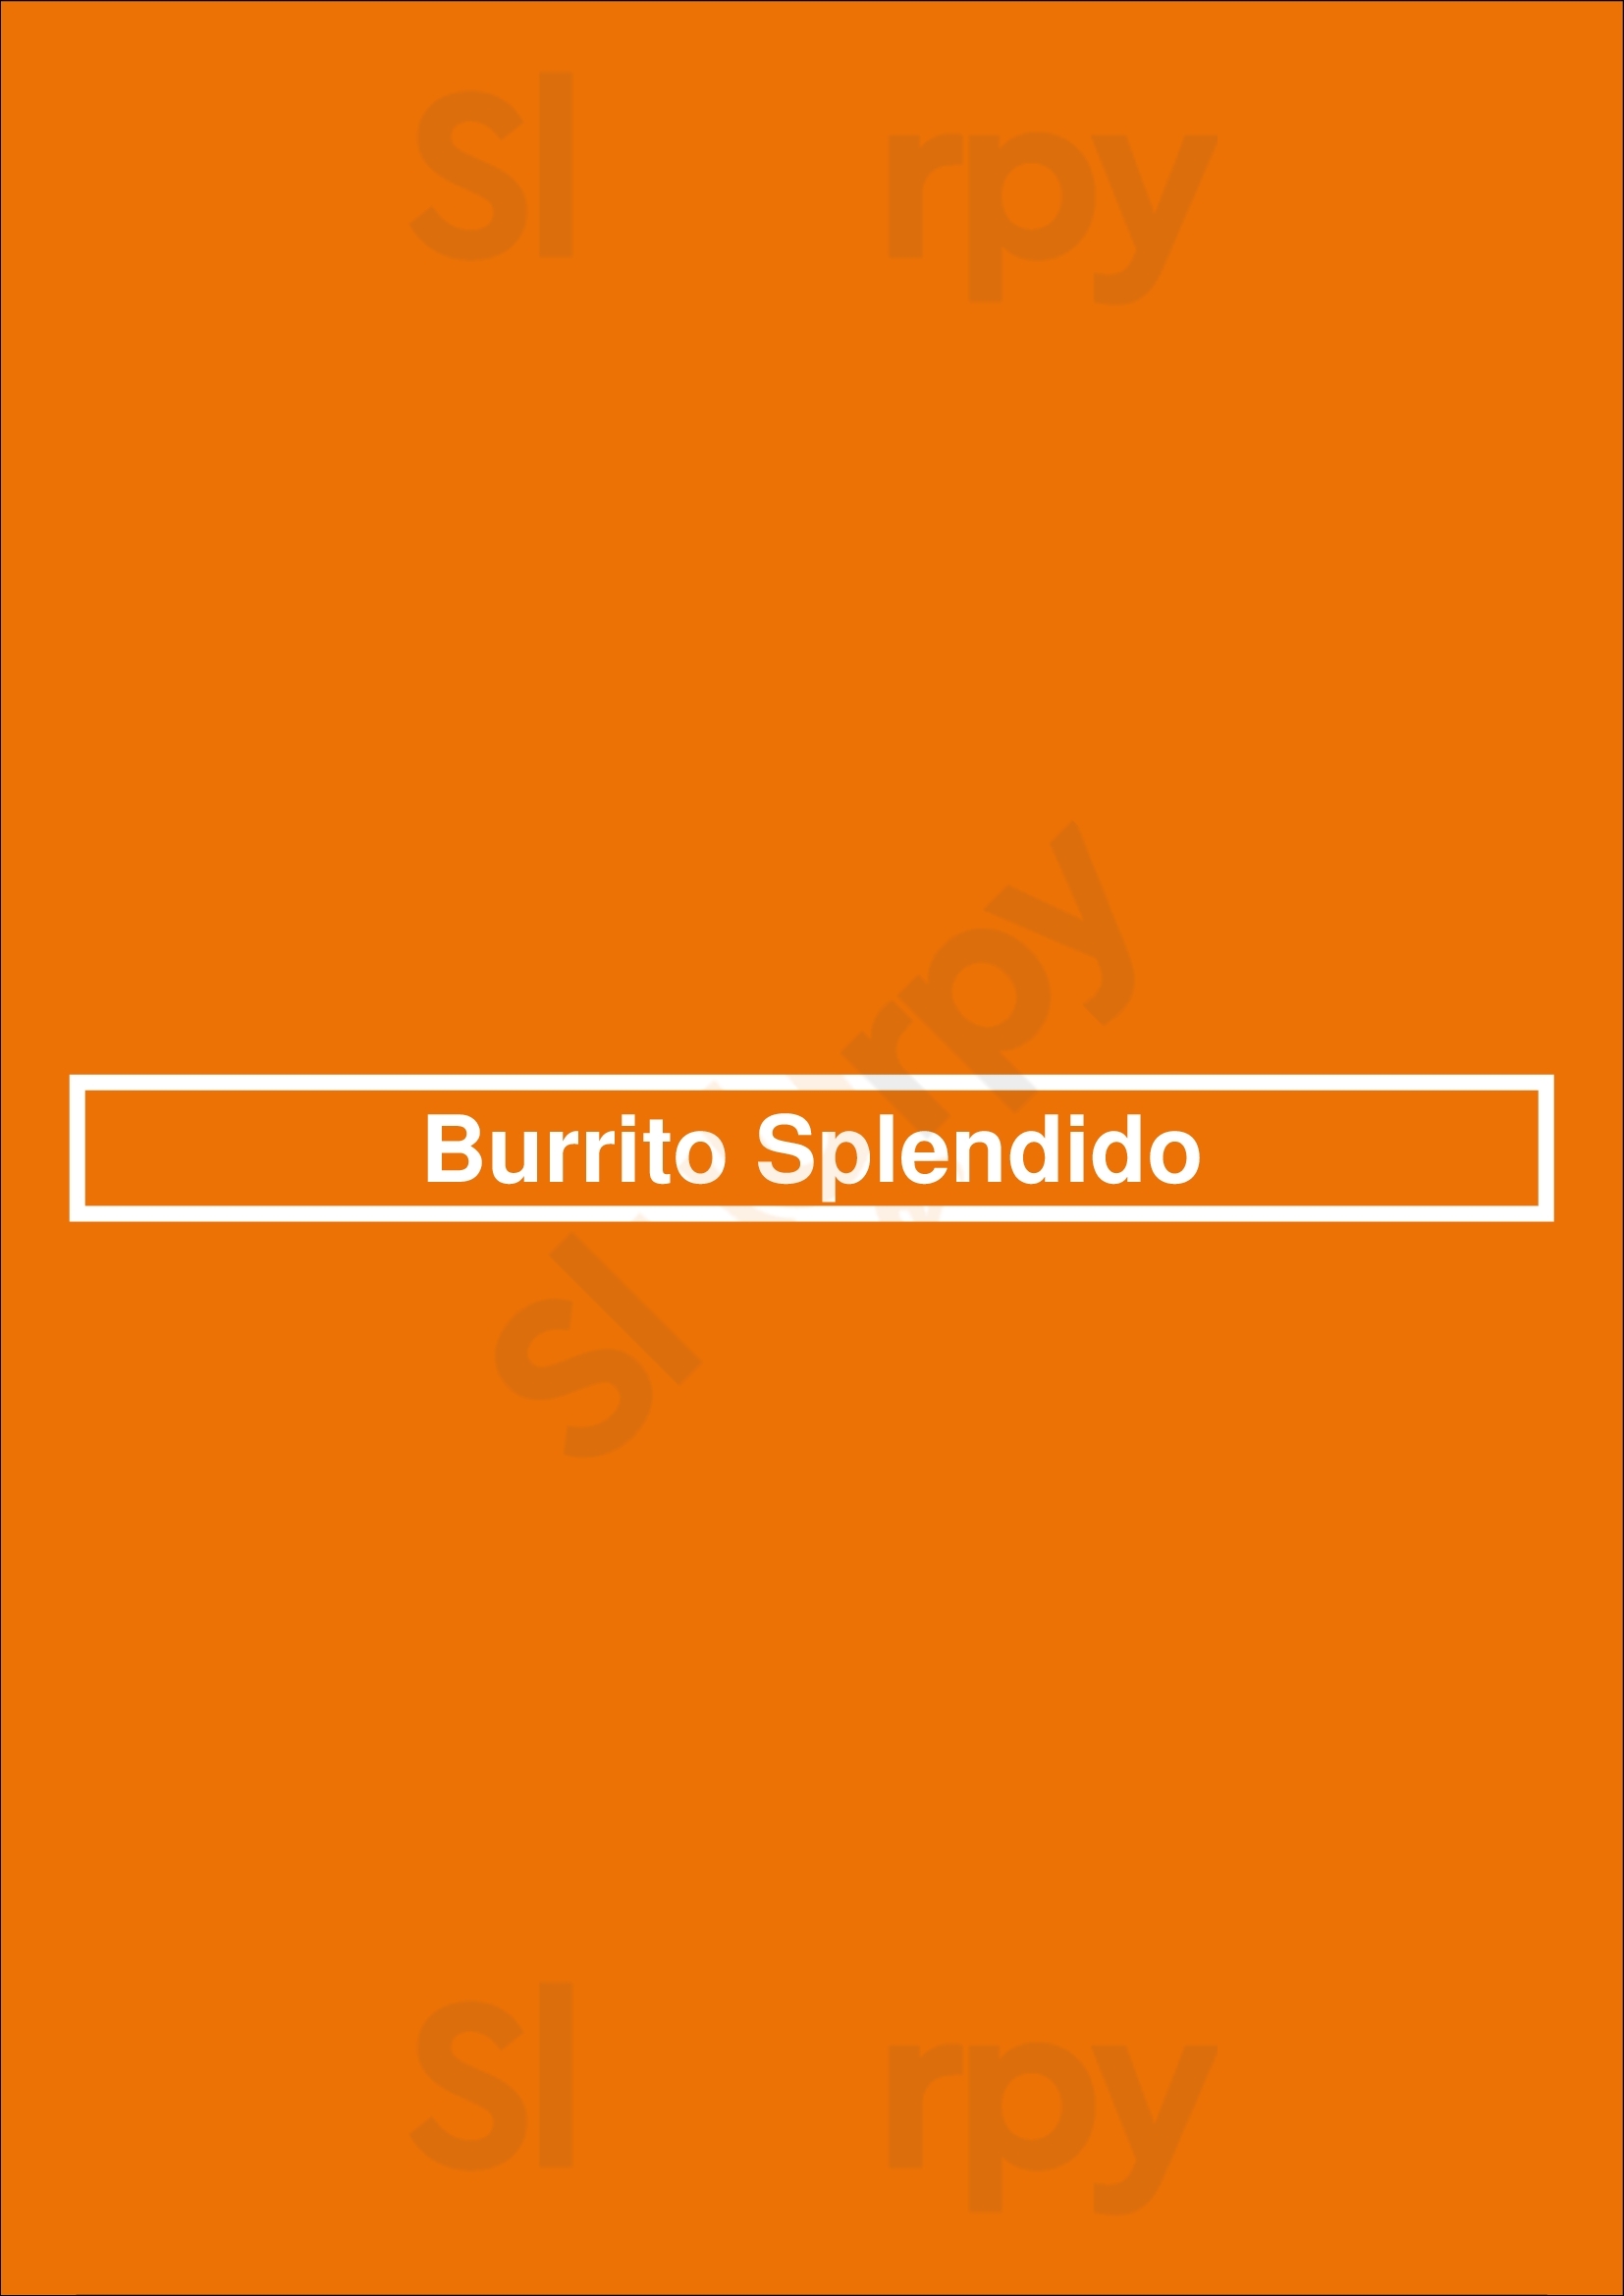 Burrito Splendido Winnipeg Menu - 1